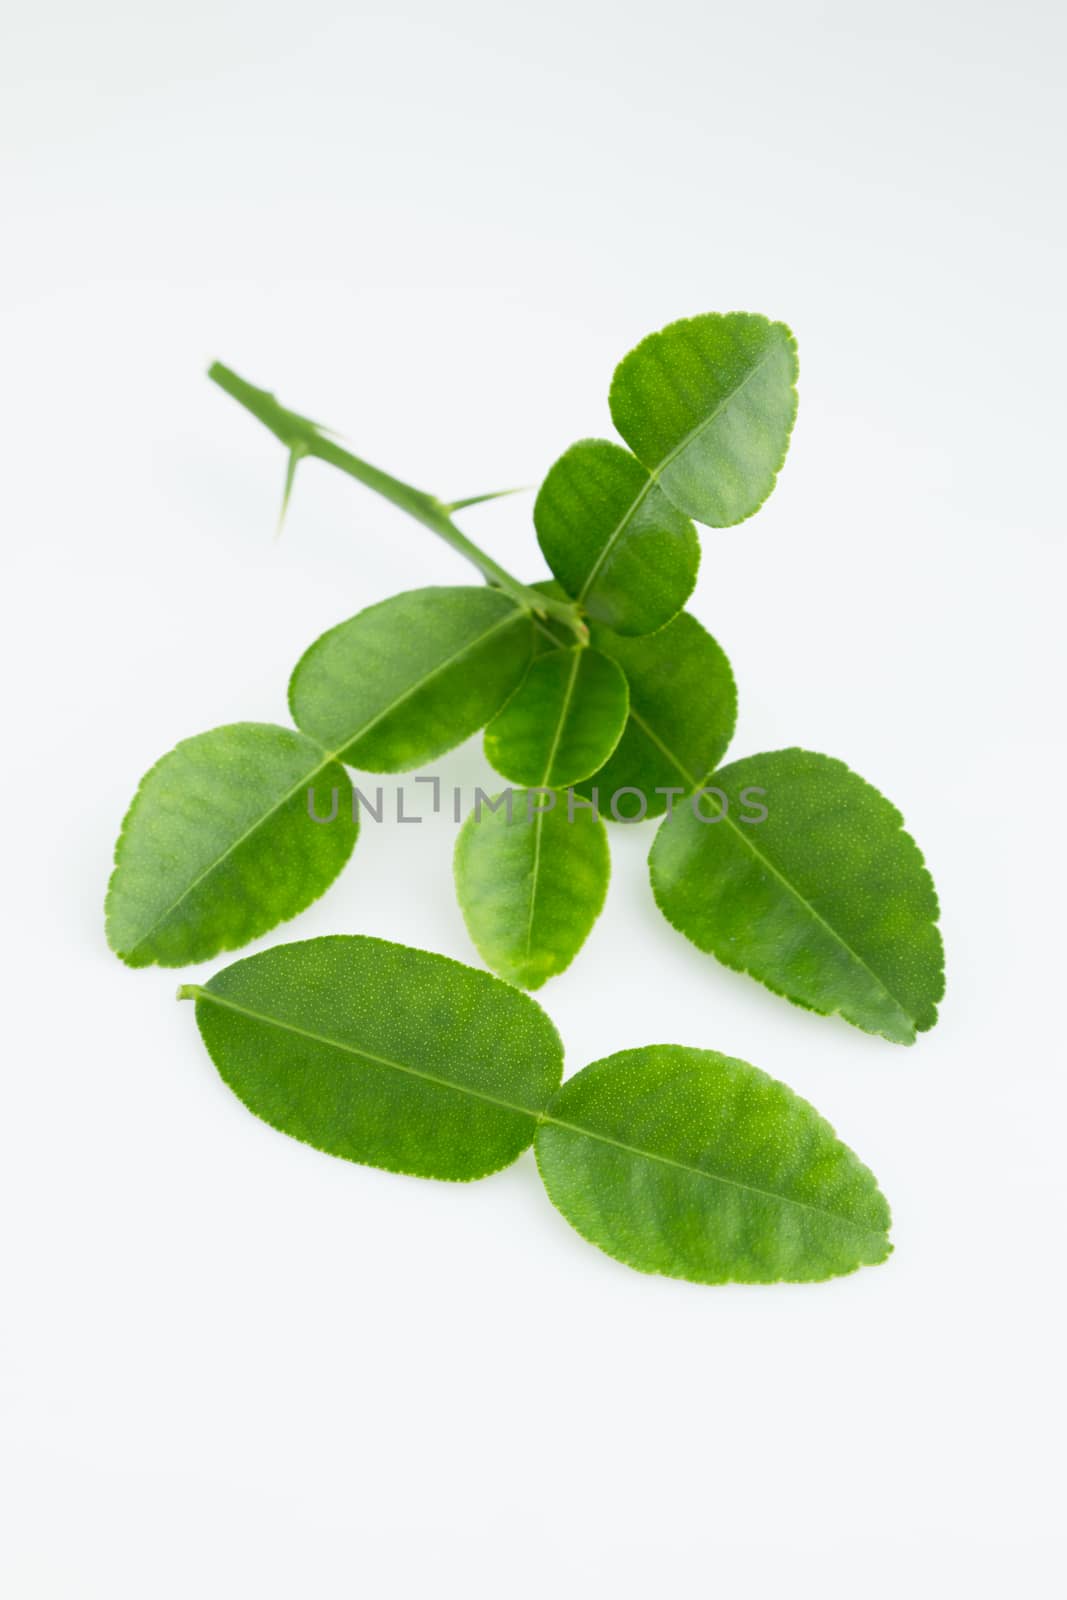 kaffir lime leaves by AEyZRiO